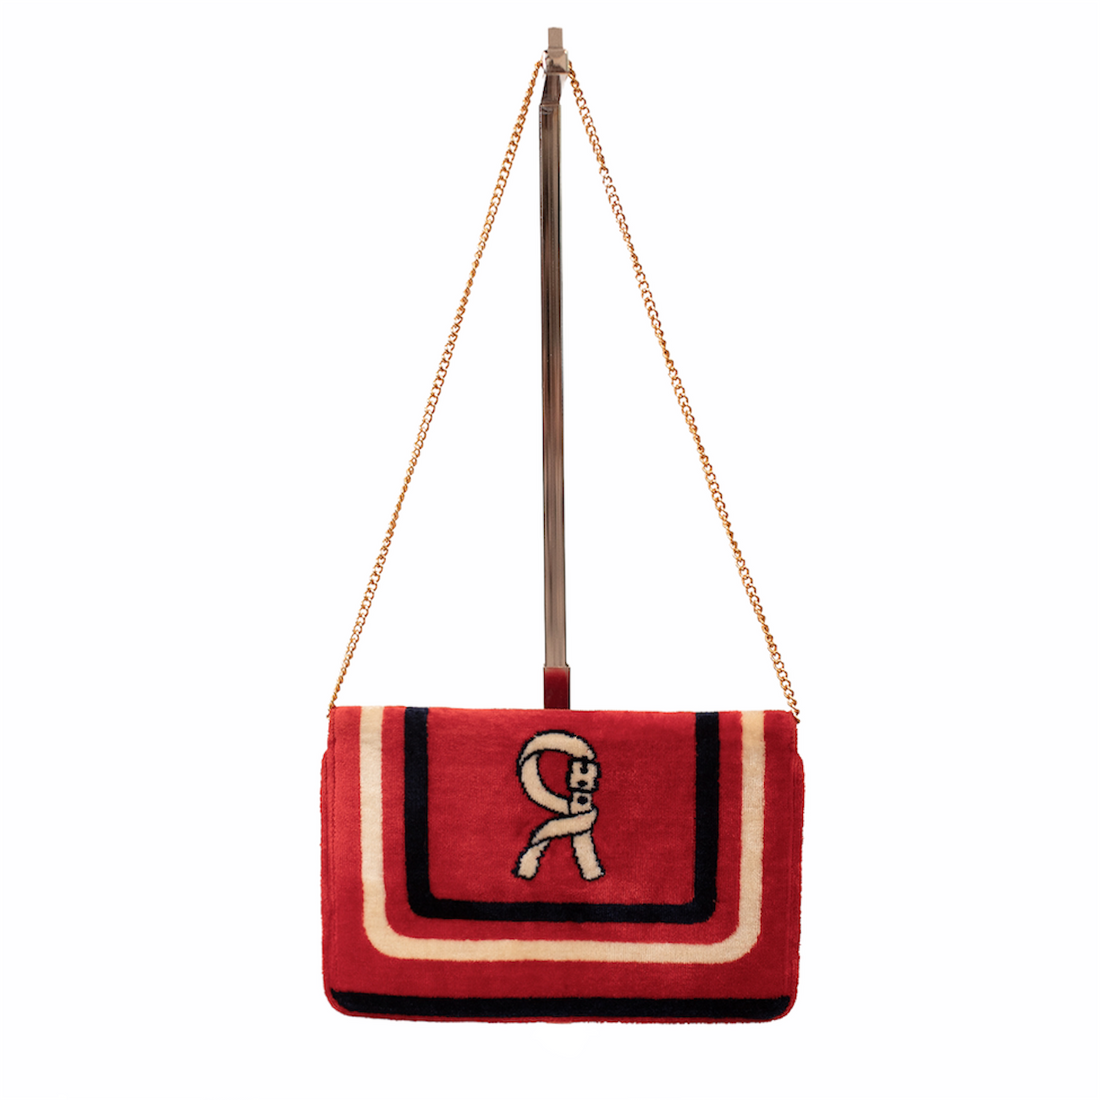 Roberta di Camerino Red clutch bag with gold chain